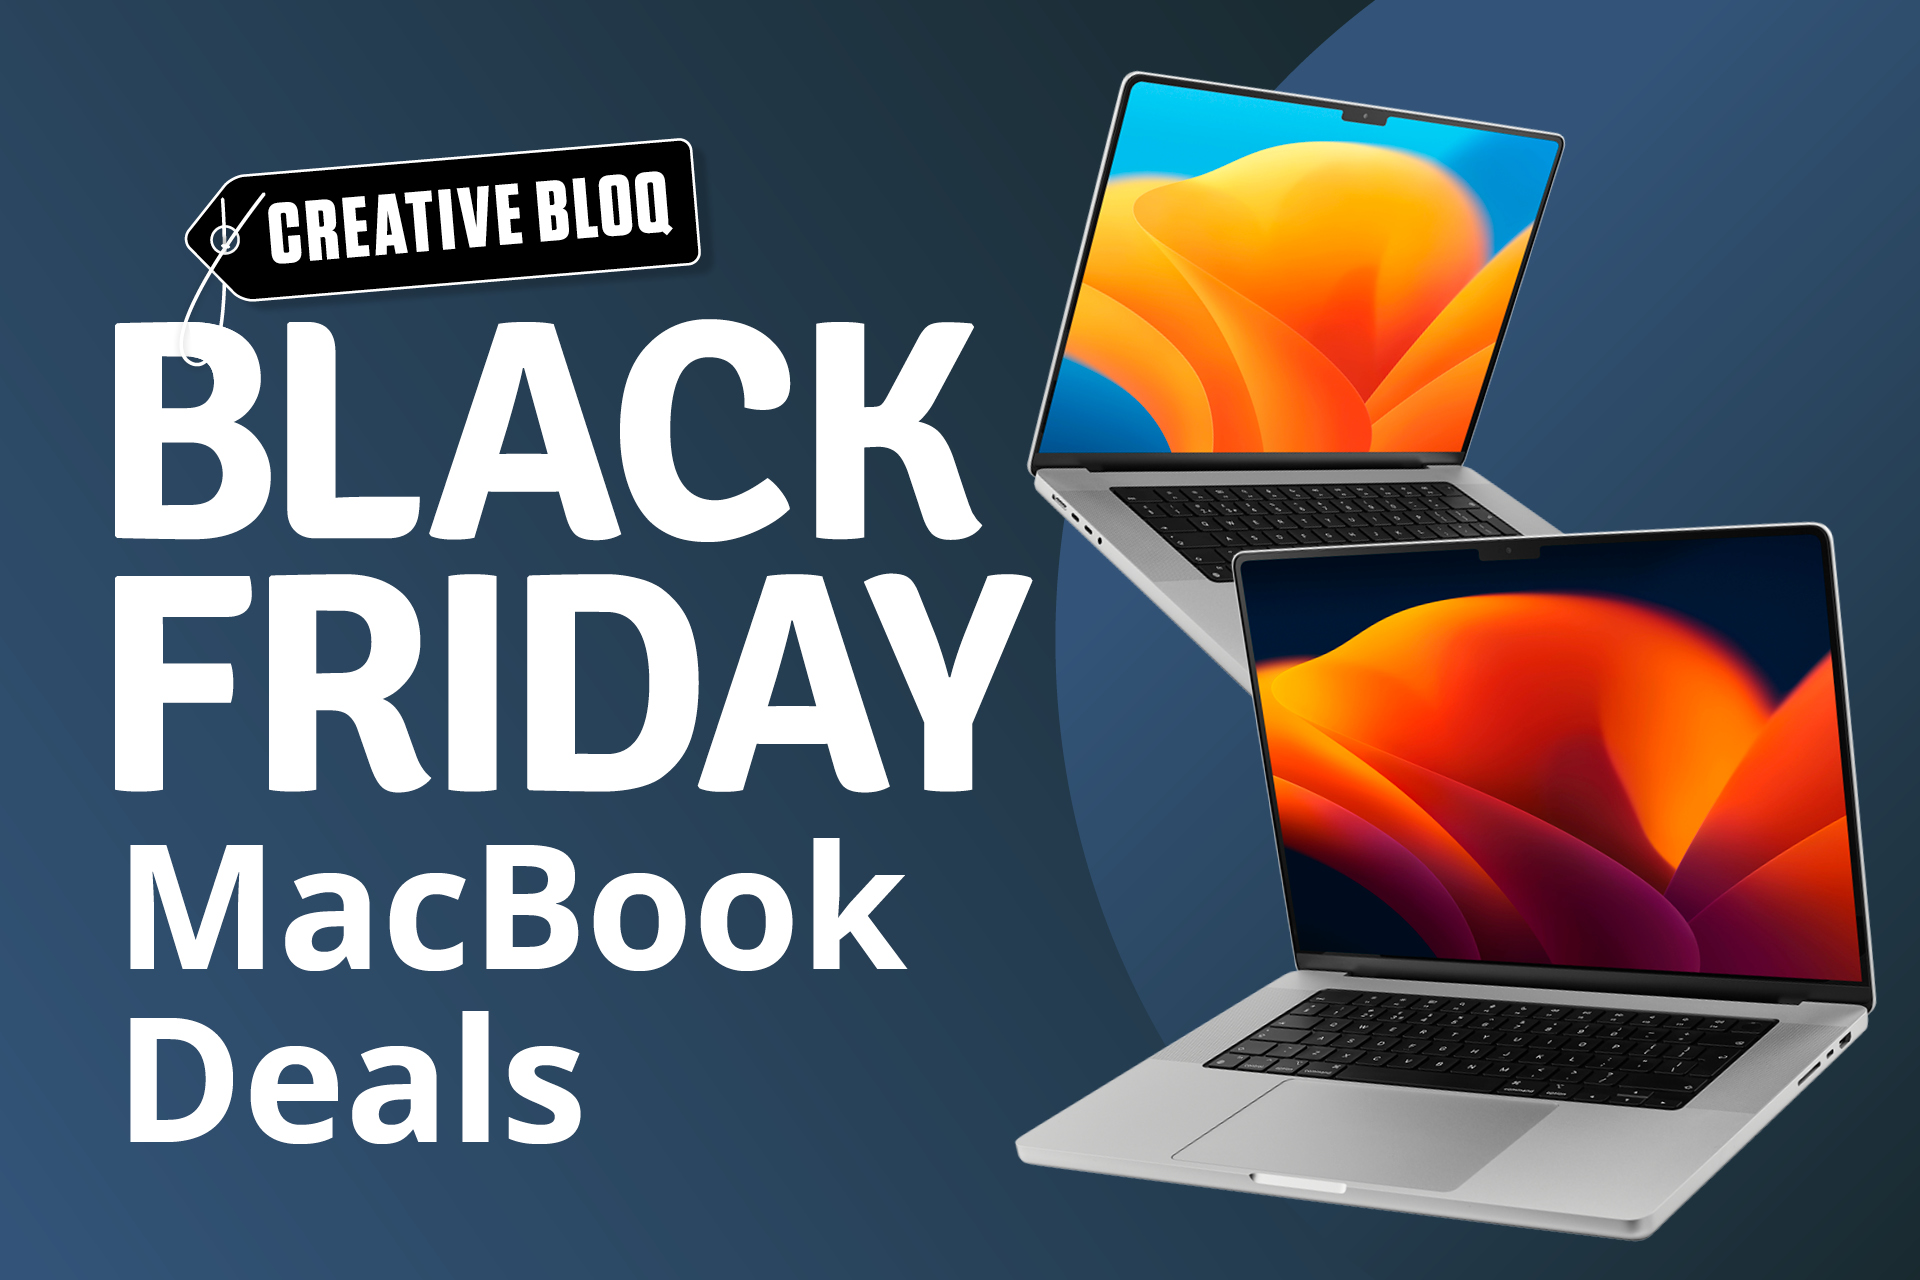 MacBook Black Friday & Cyber Monday deals live blog The best MacBook